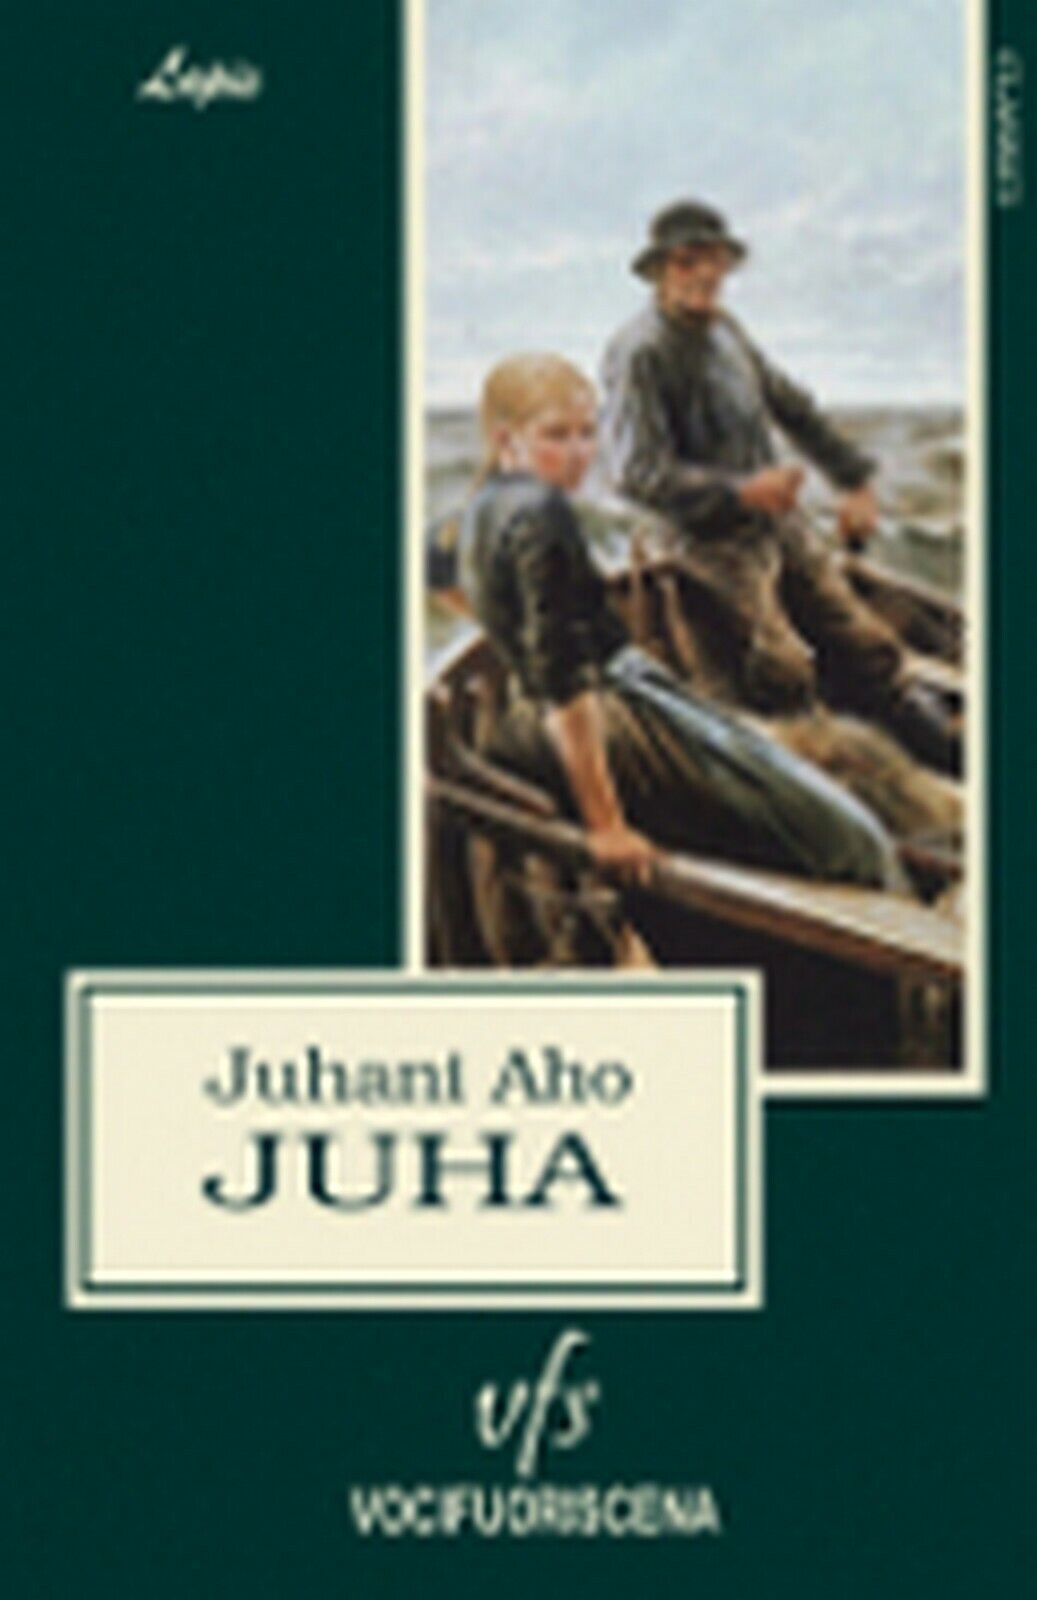 JUHA  di Juhani Aho,  2018,  Vocifuoriscena libro usato